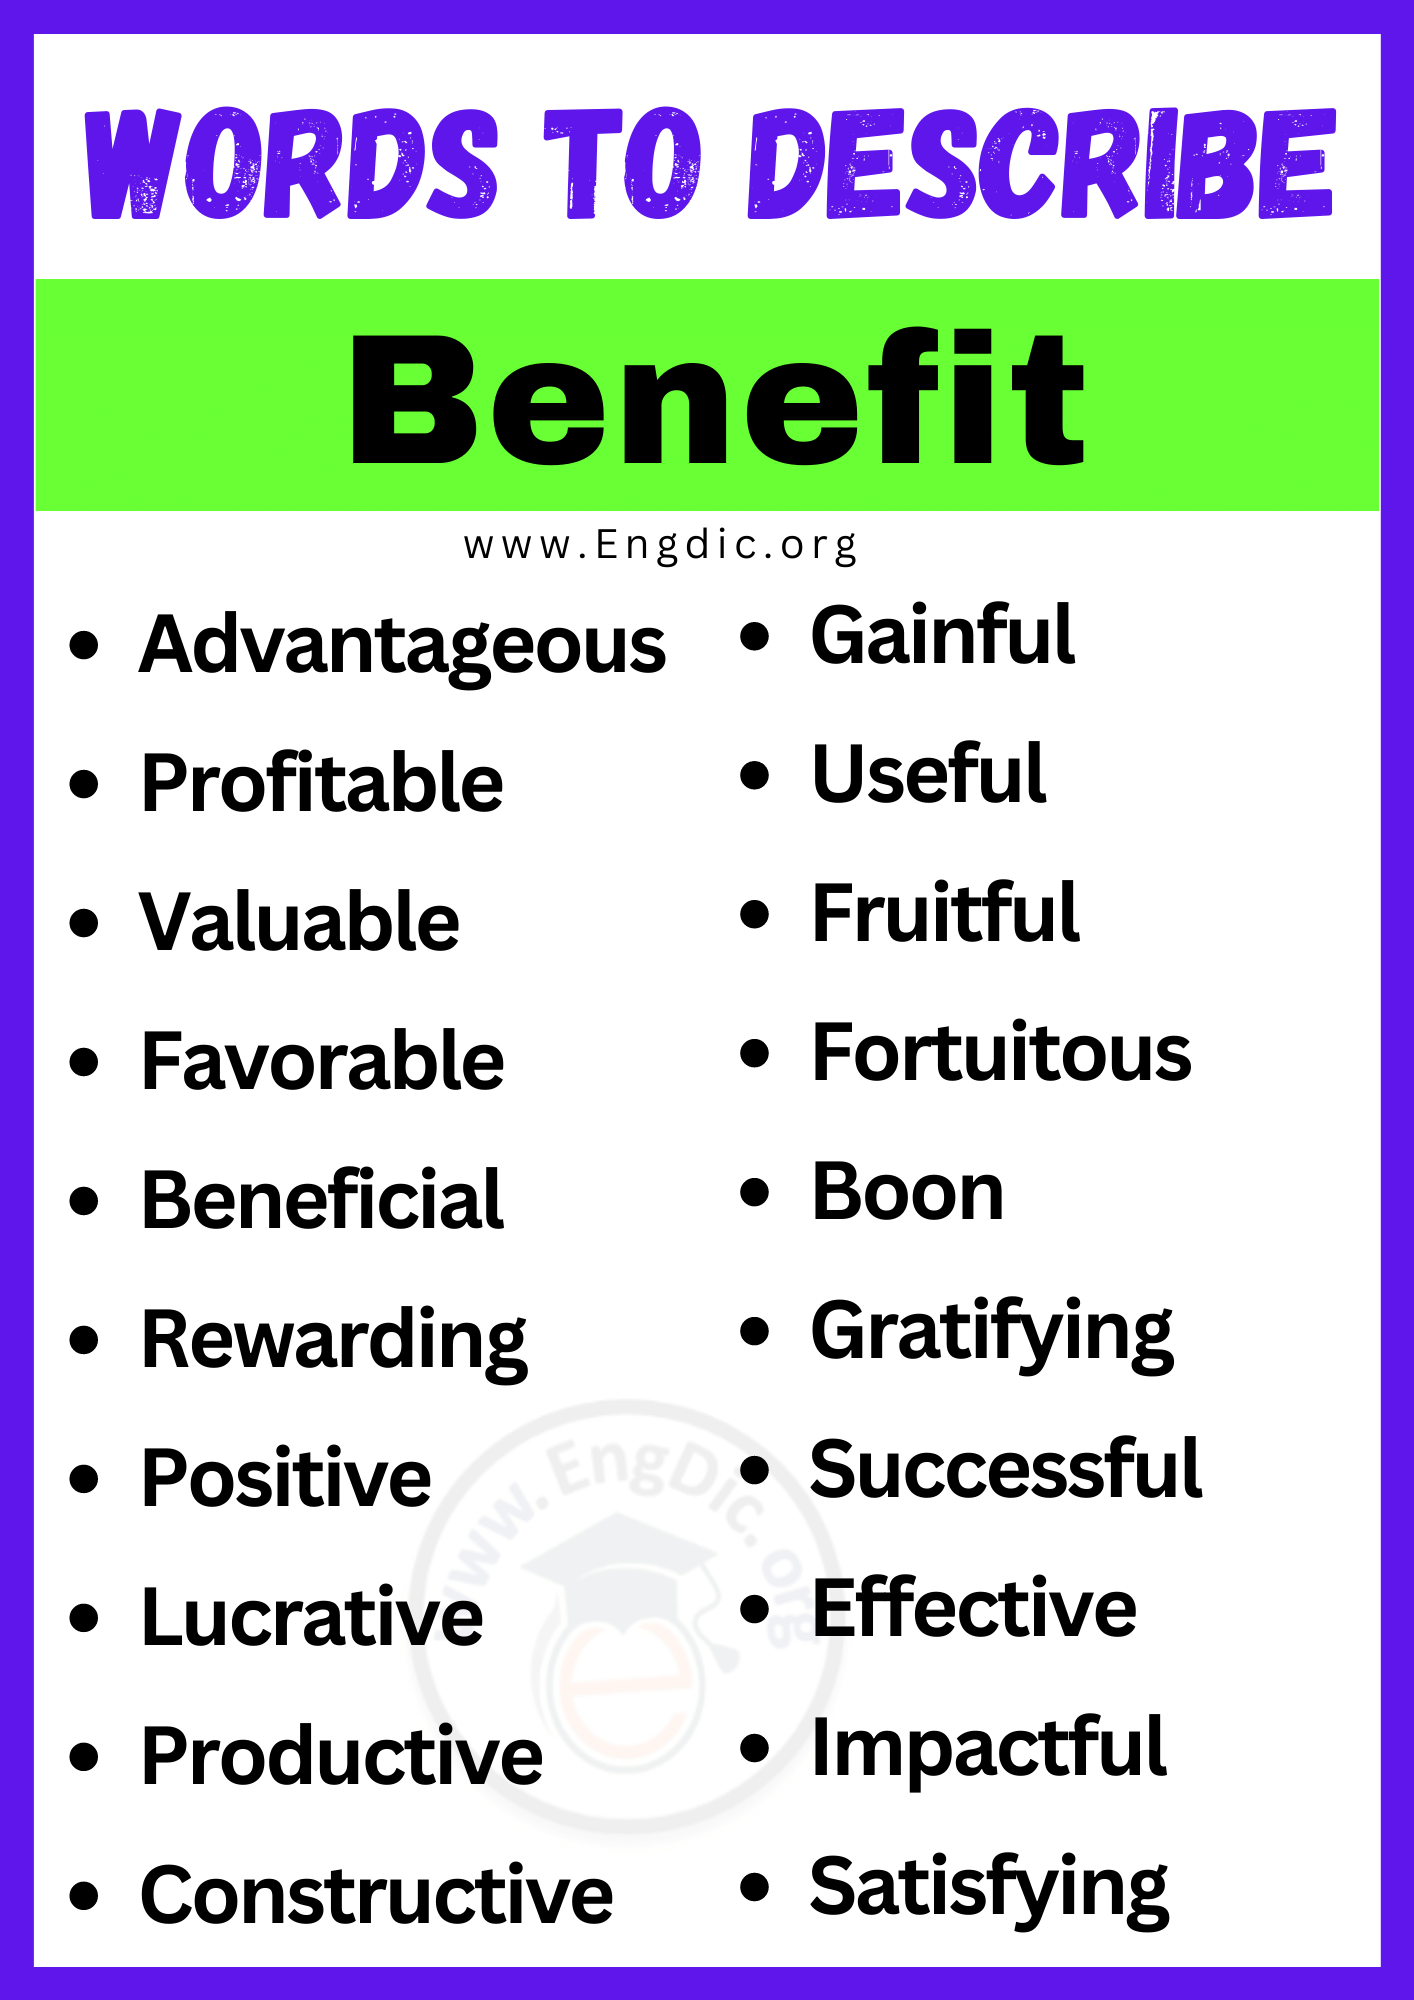 Words to Describe Benefit